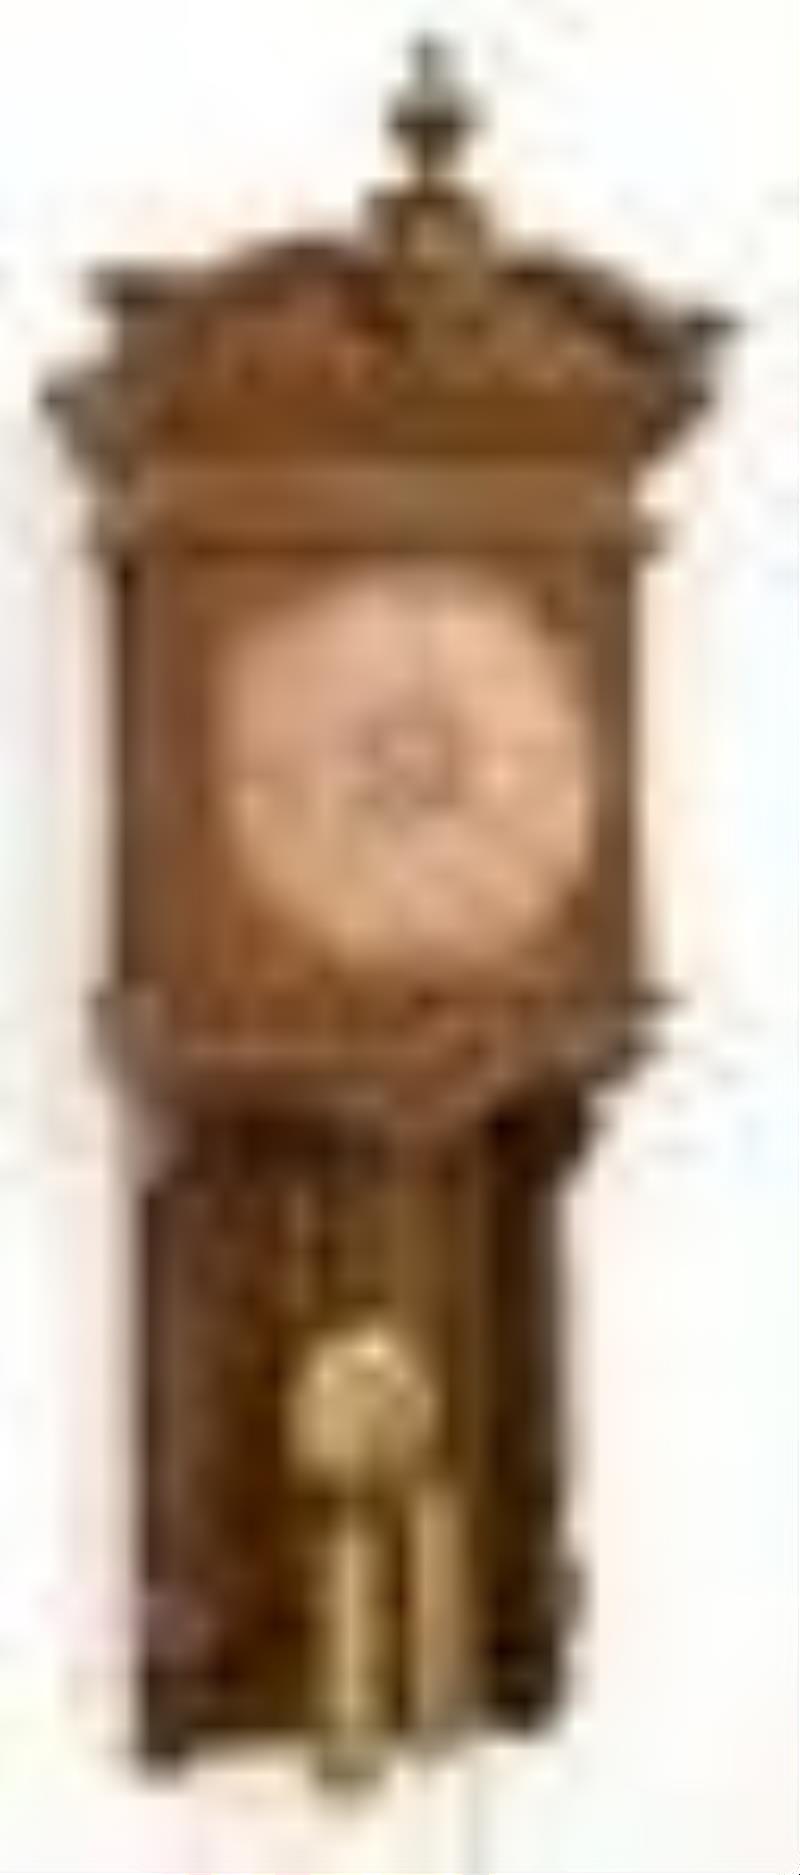 Ansonia Clock Co. "Niobe" Wall Regulator Clock